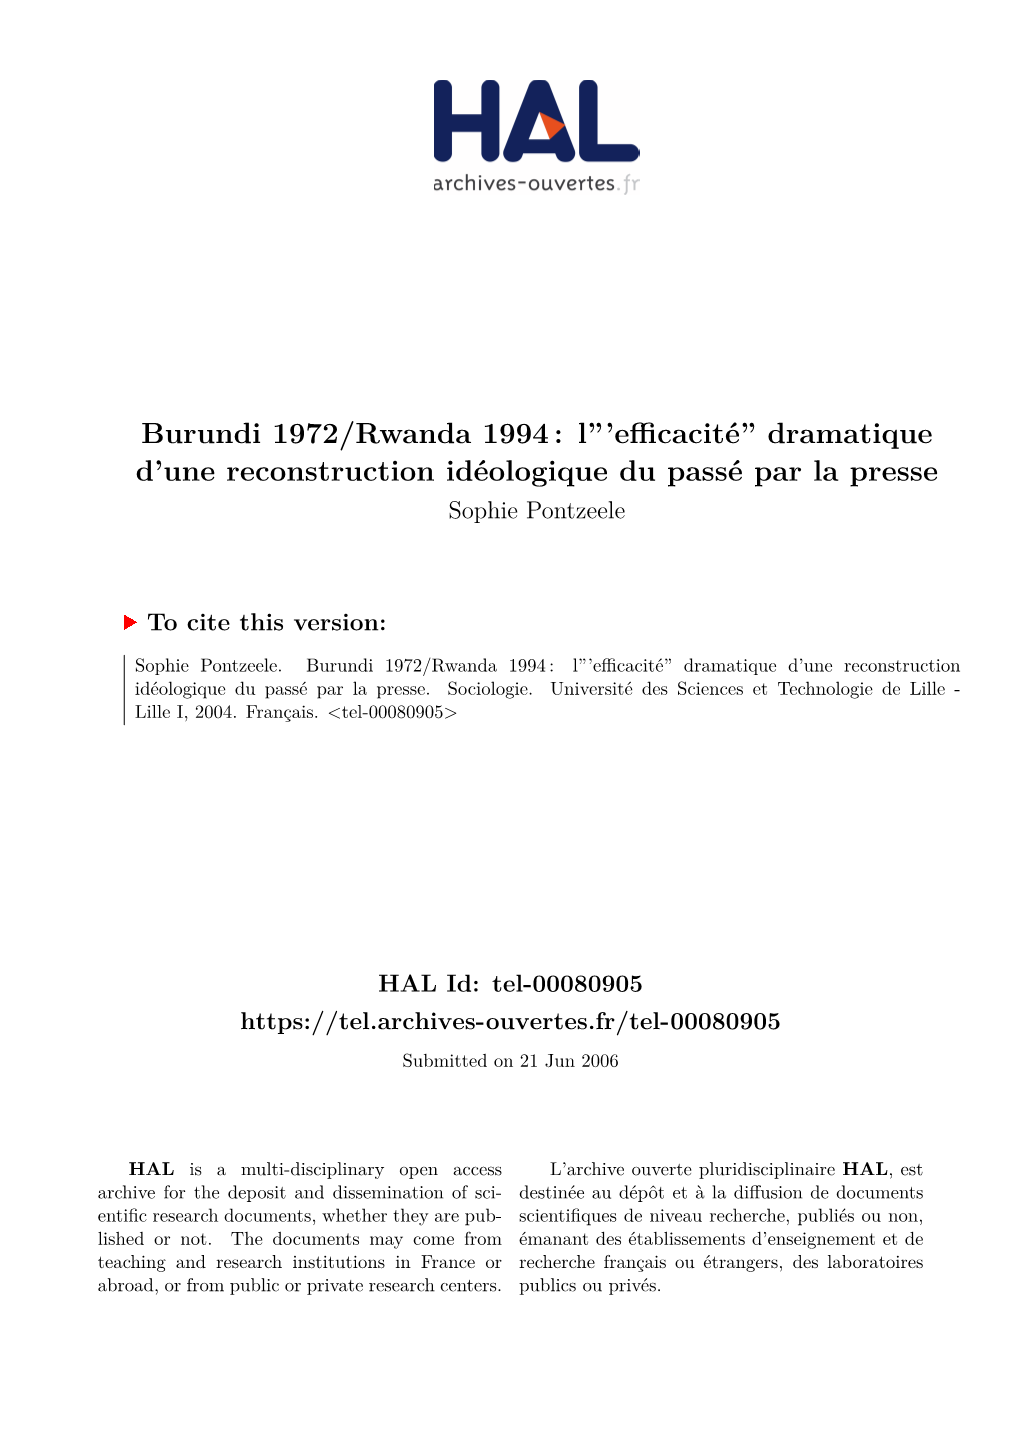 Burundi 1972/Rwanda 1994: L'''efficacité'' Dramatique D'une